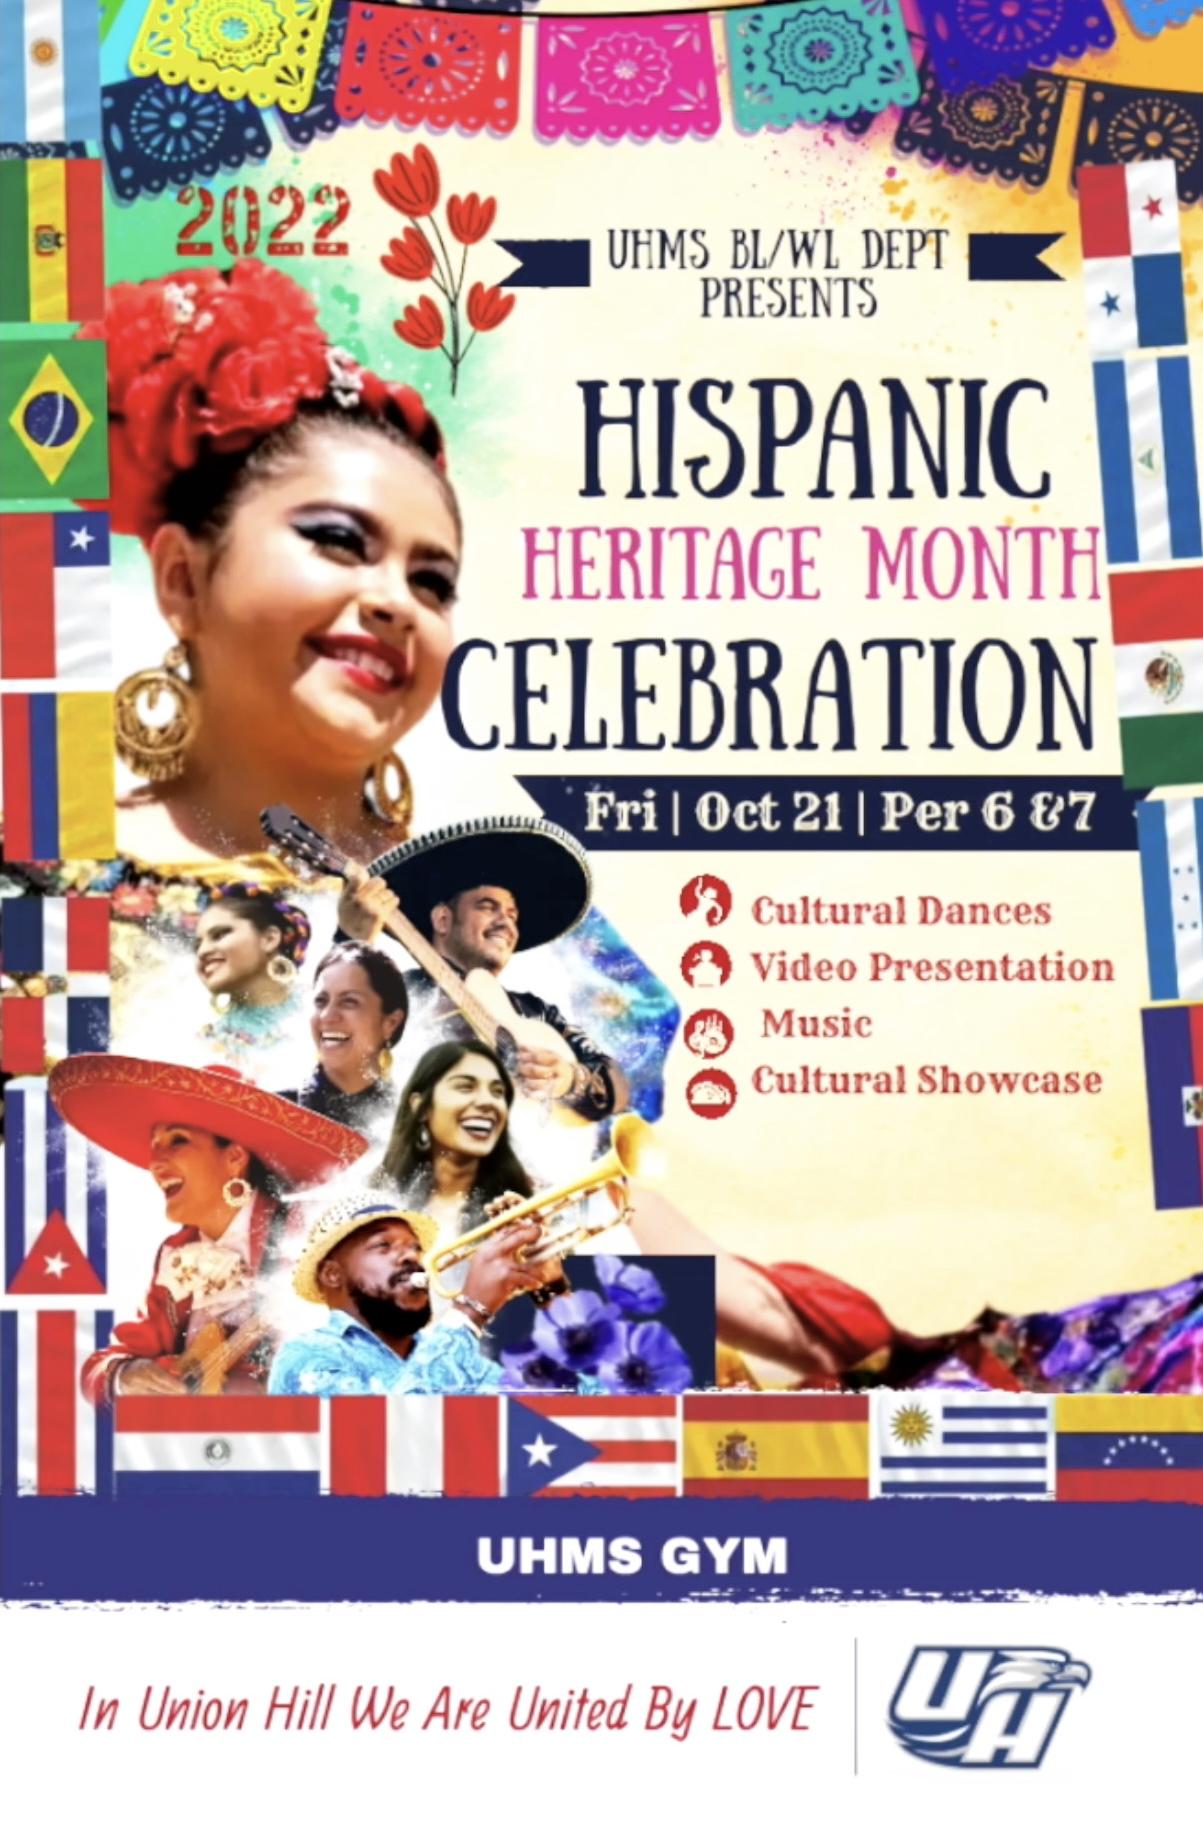 Union Hill Middle School Hispanic Heritage Month Celebration